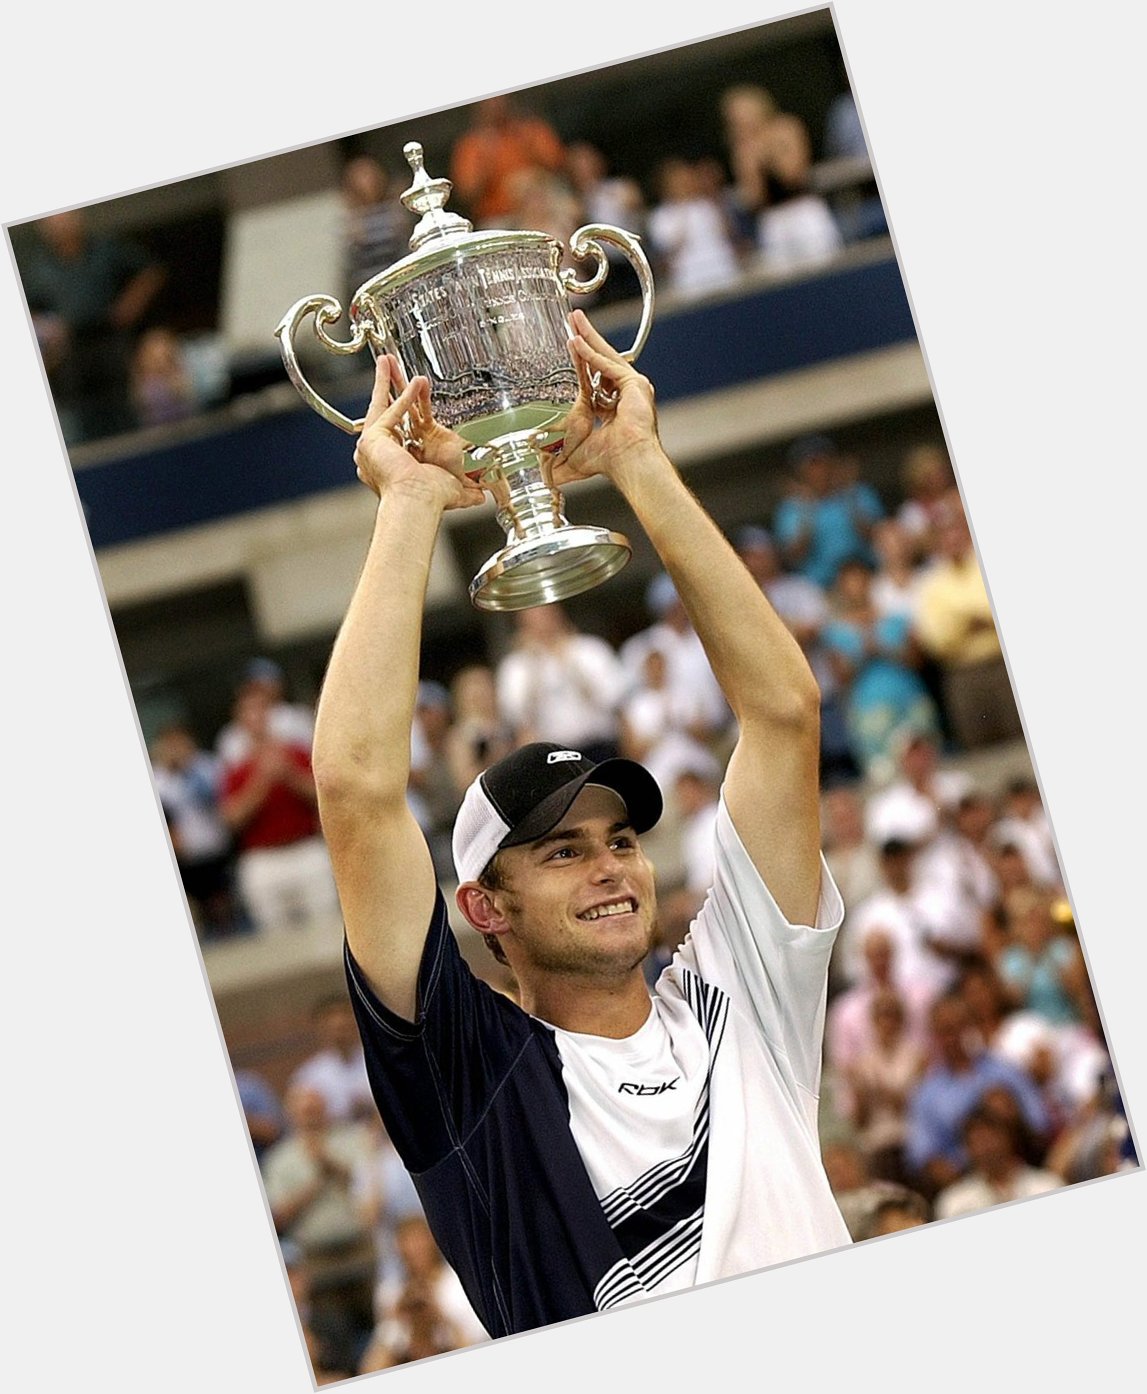  Happy birthday Andy Roddick ! 

Dire que le vainqueur de l\US Open 2003 n\a que 39 ans... 